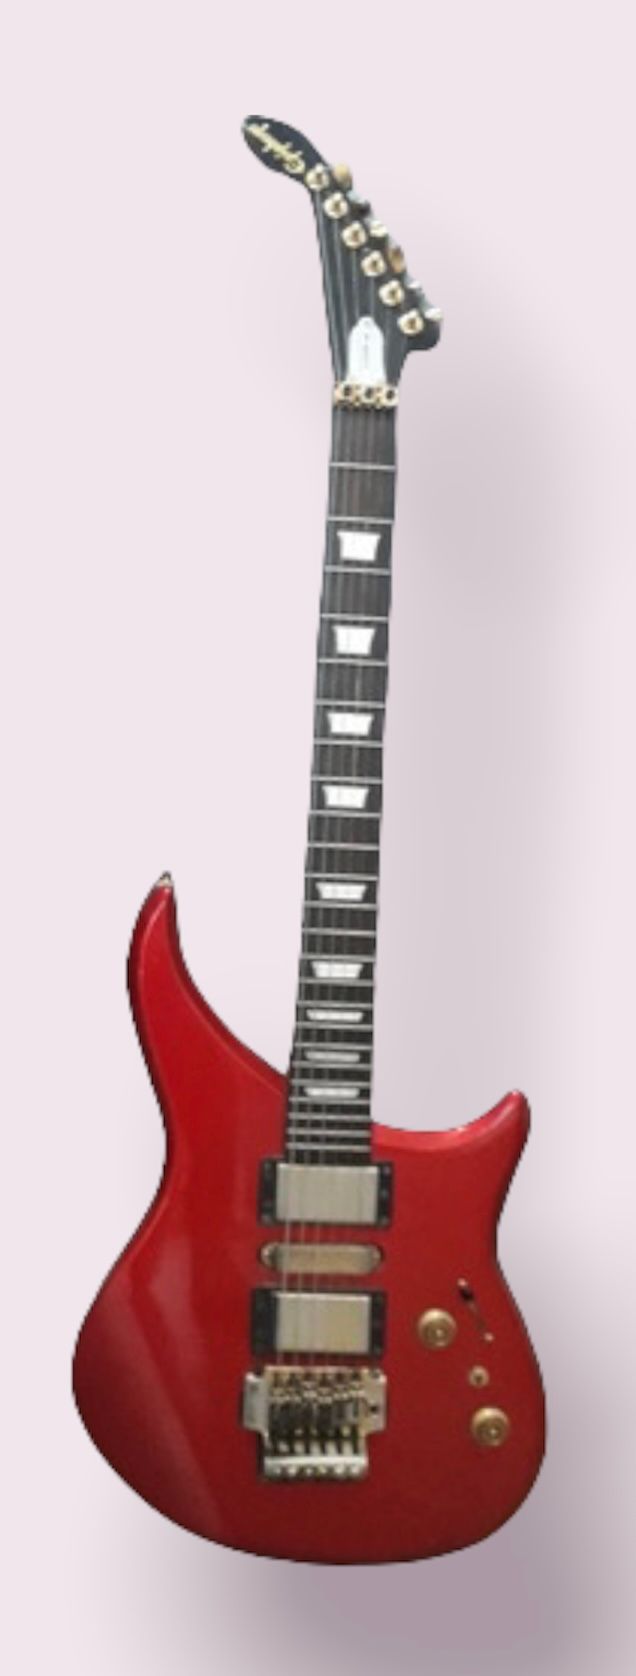 Null * GUITARRA ELÉCTRICA, EPIFONO, tipo Stratocaster

Rojo, n° S2030011

Con ta&hellip;